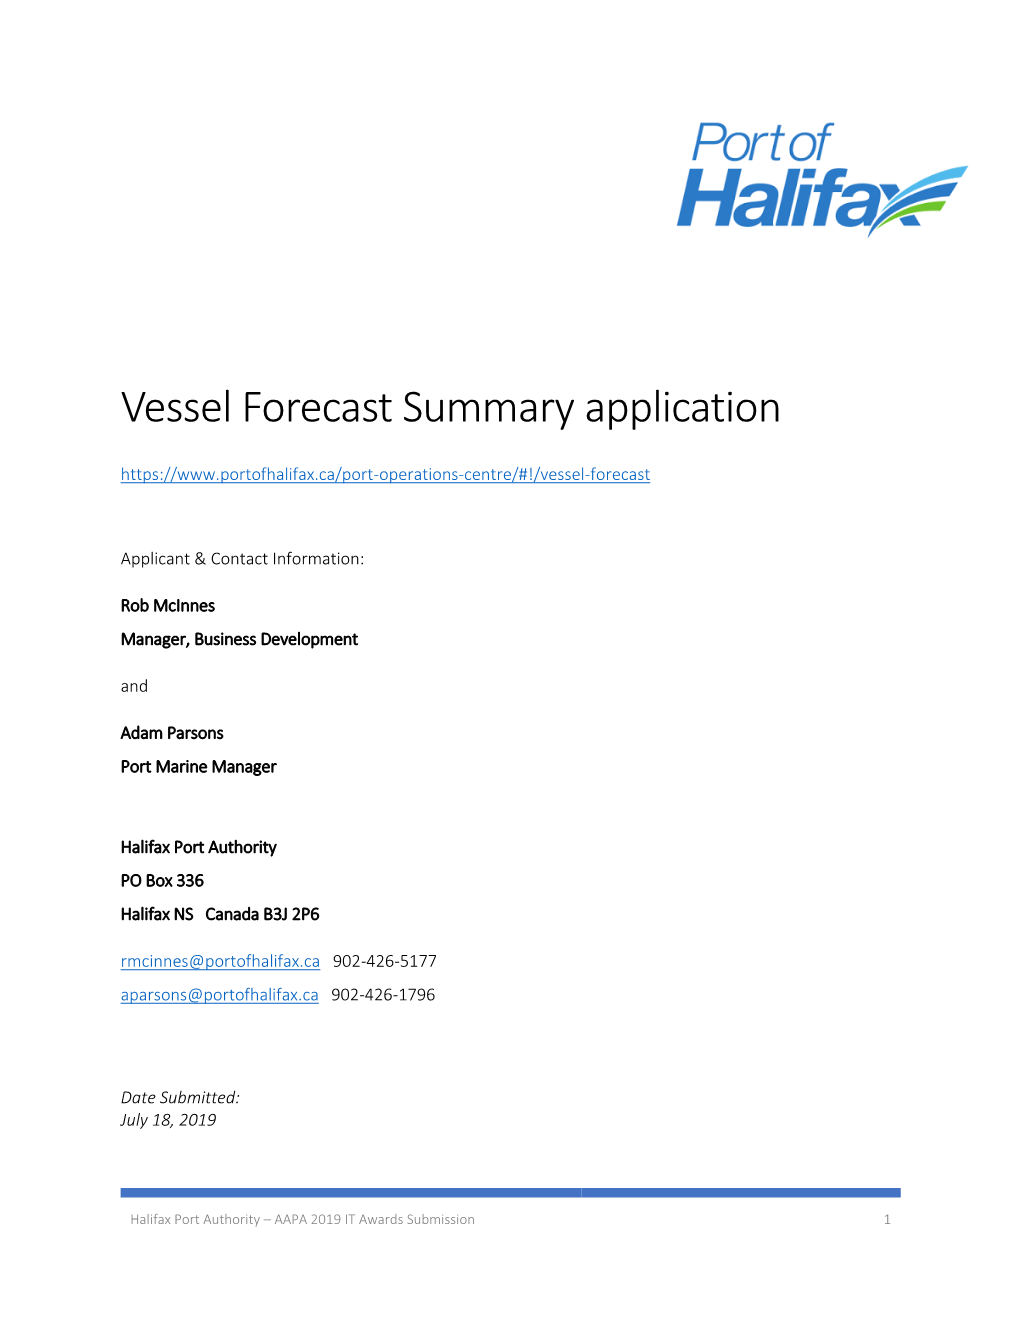 Vessel Forecast Summary Application